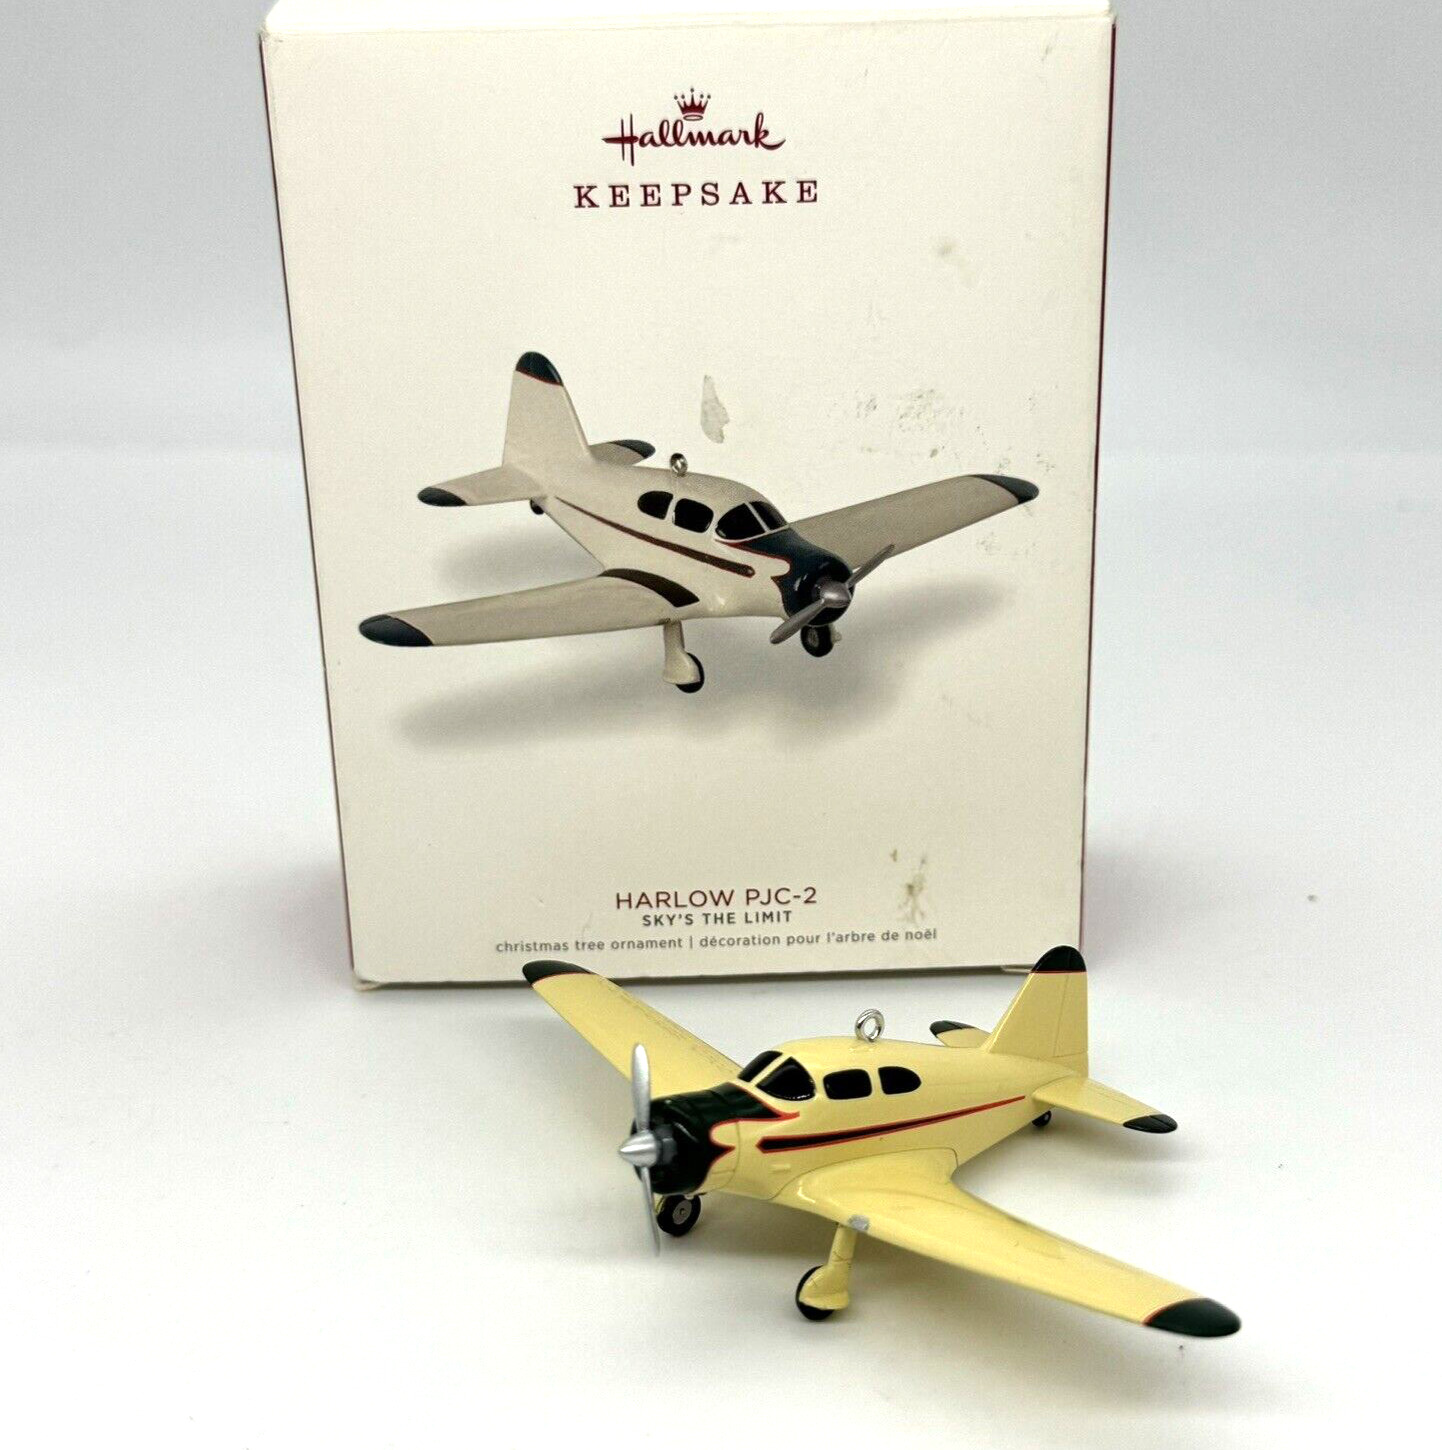 Hallmark Keepsake HARLOW PJC-2 Sky's The Limit Series Airplane Ornament In Box